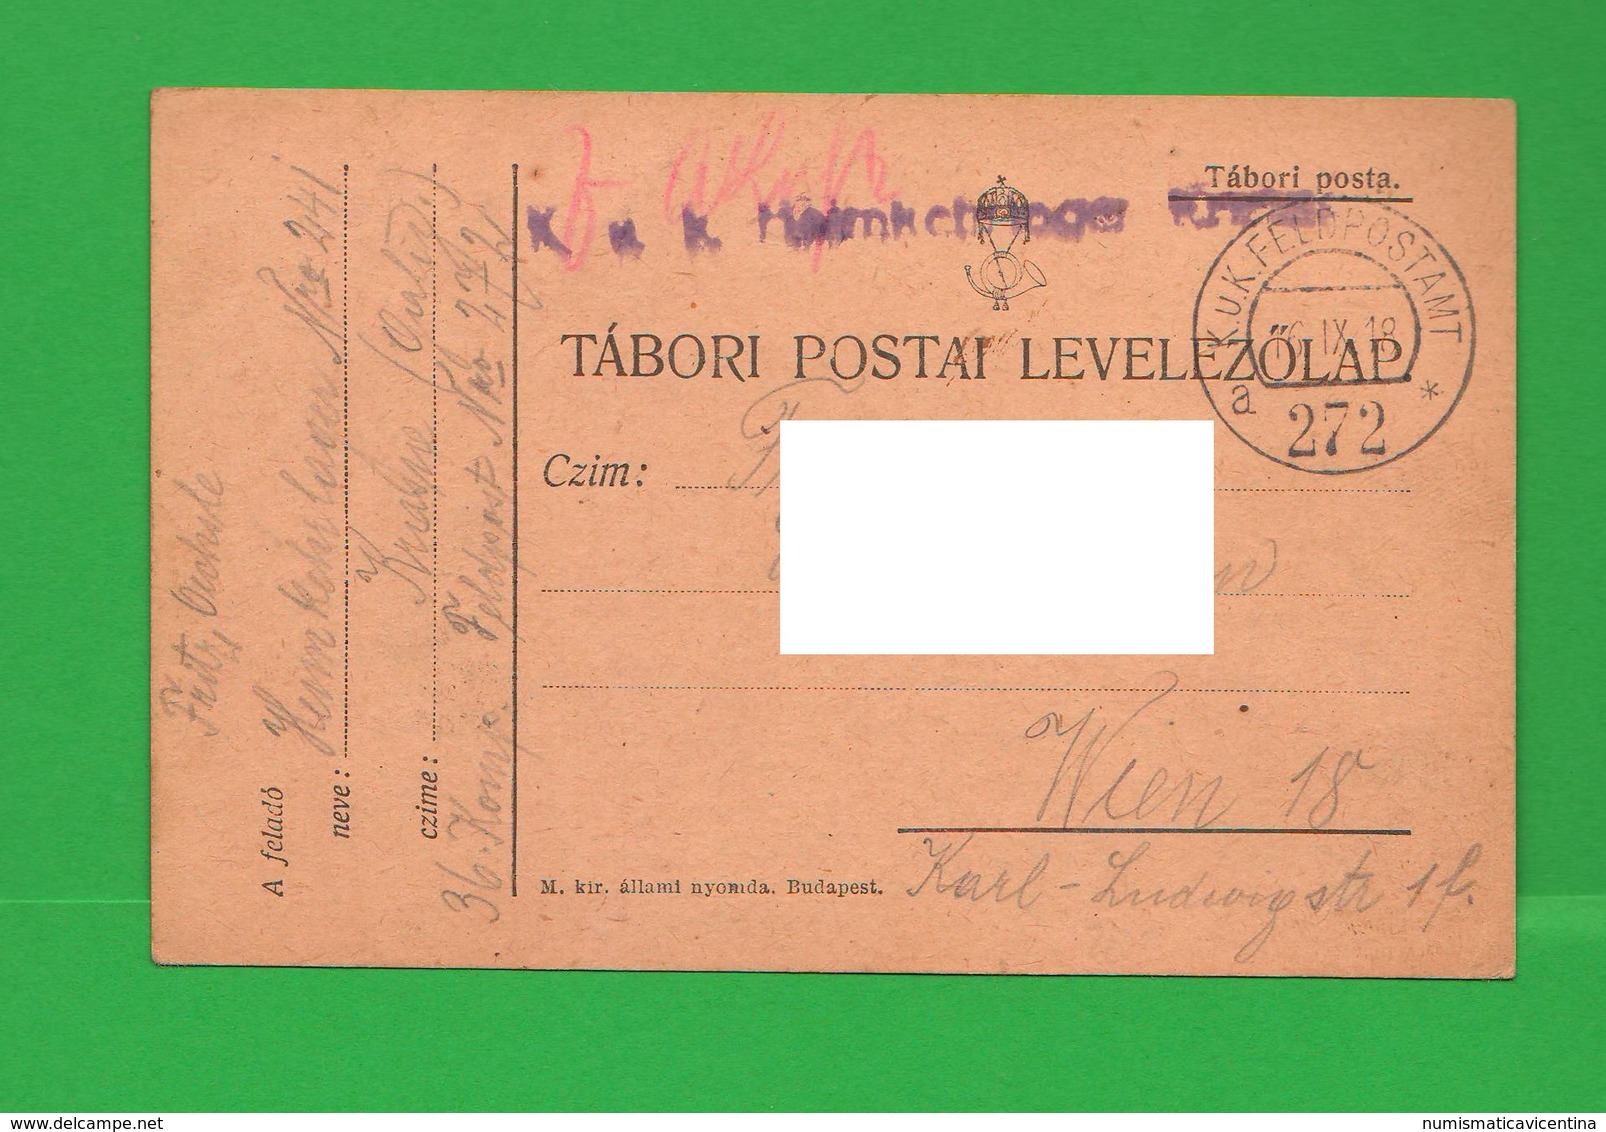 Militärposten X Wien 1918 Tabori Postai Levelezolap Feldpostkarte - Documents